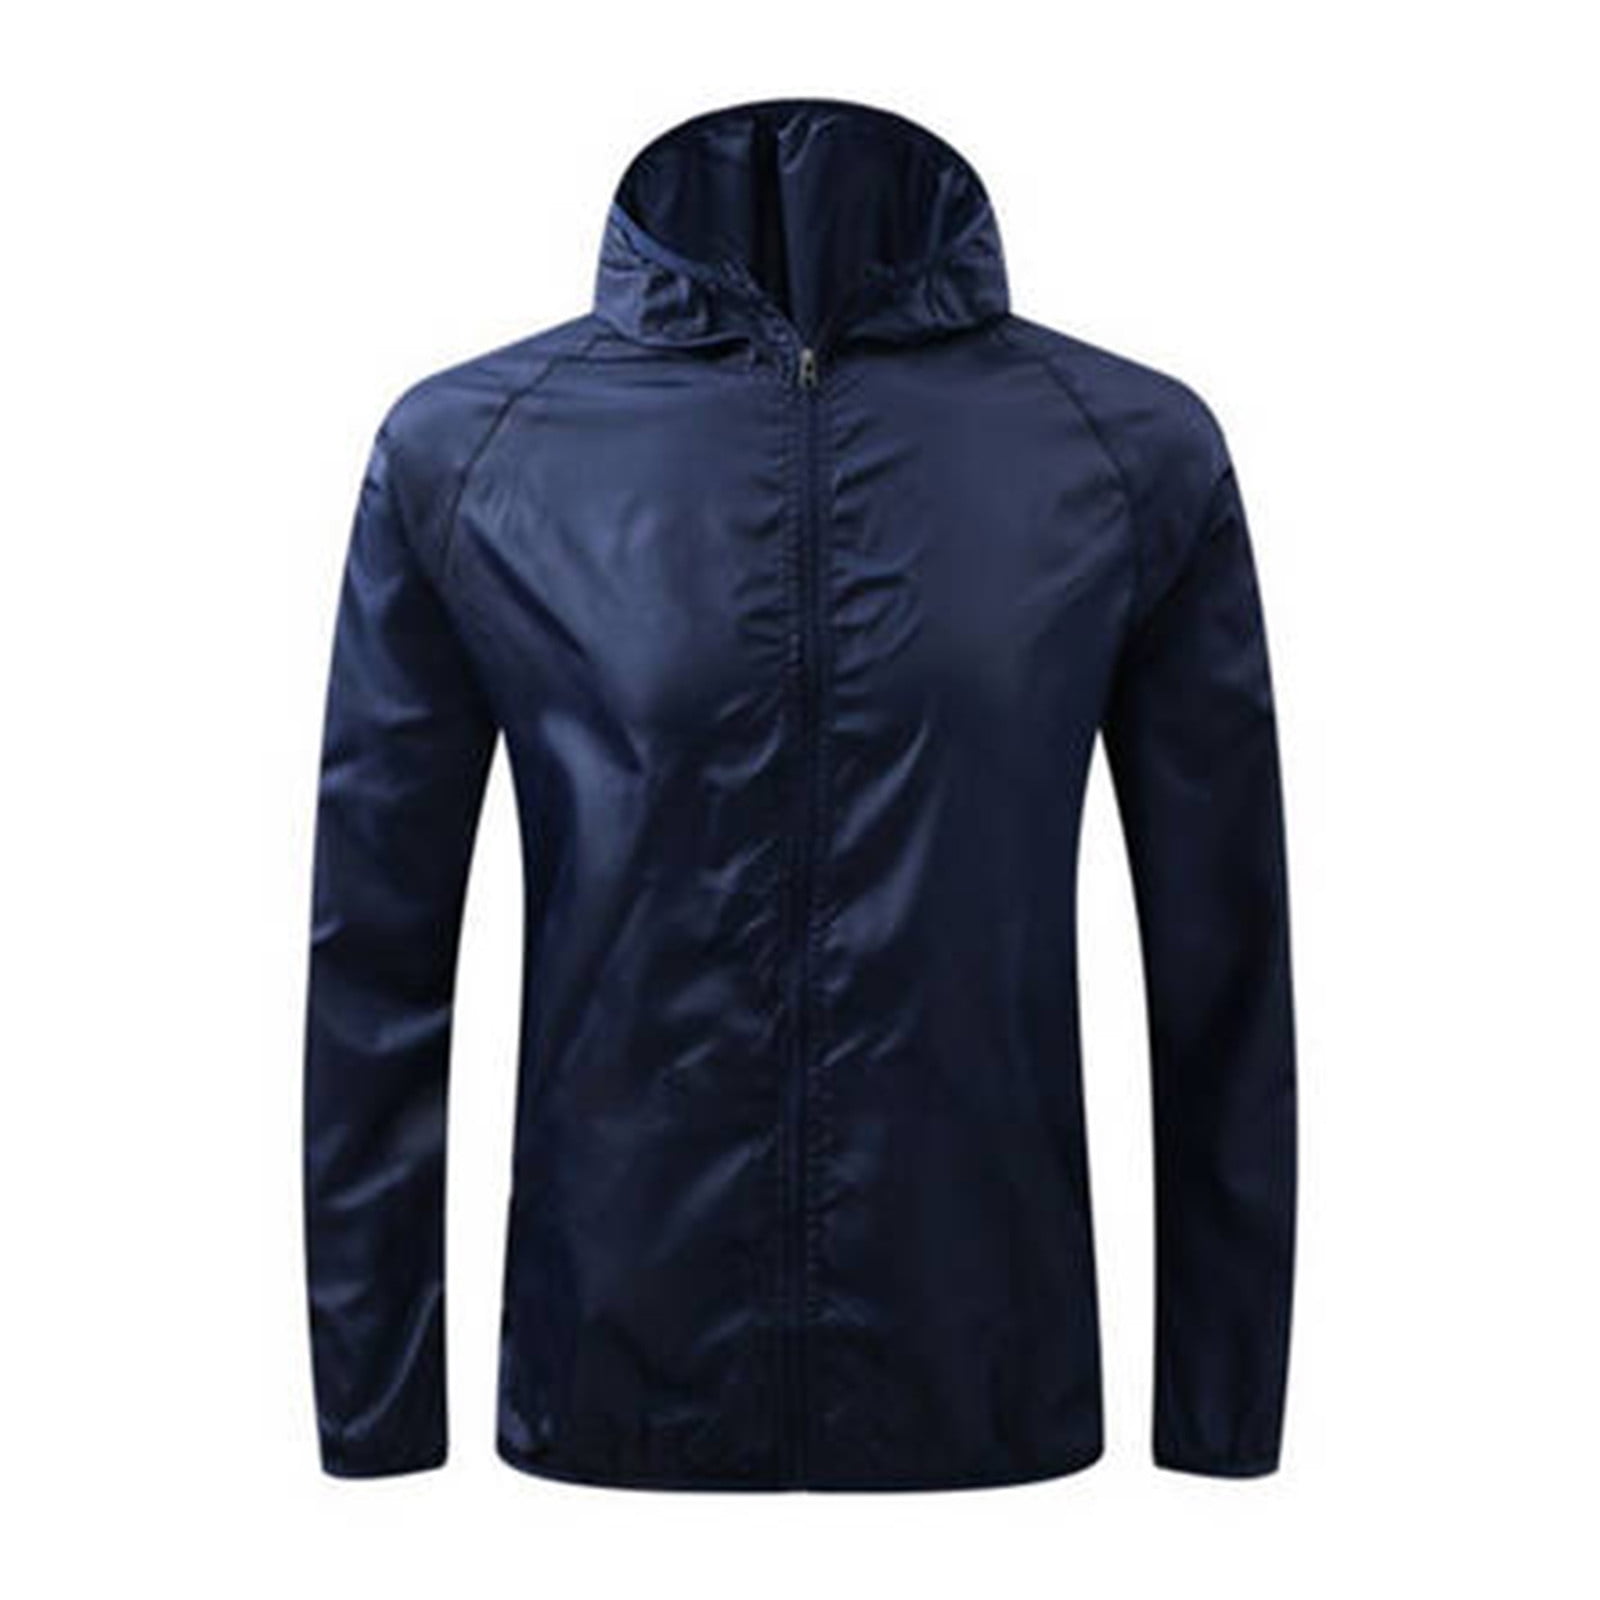 Zip Up Rain Jackets for Women Waterproof with Hood Plus Size ...